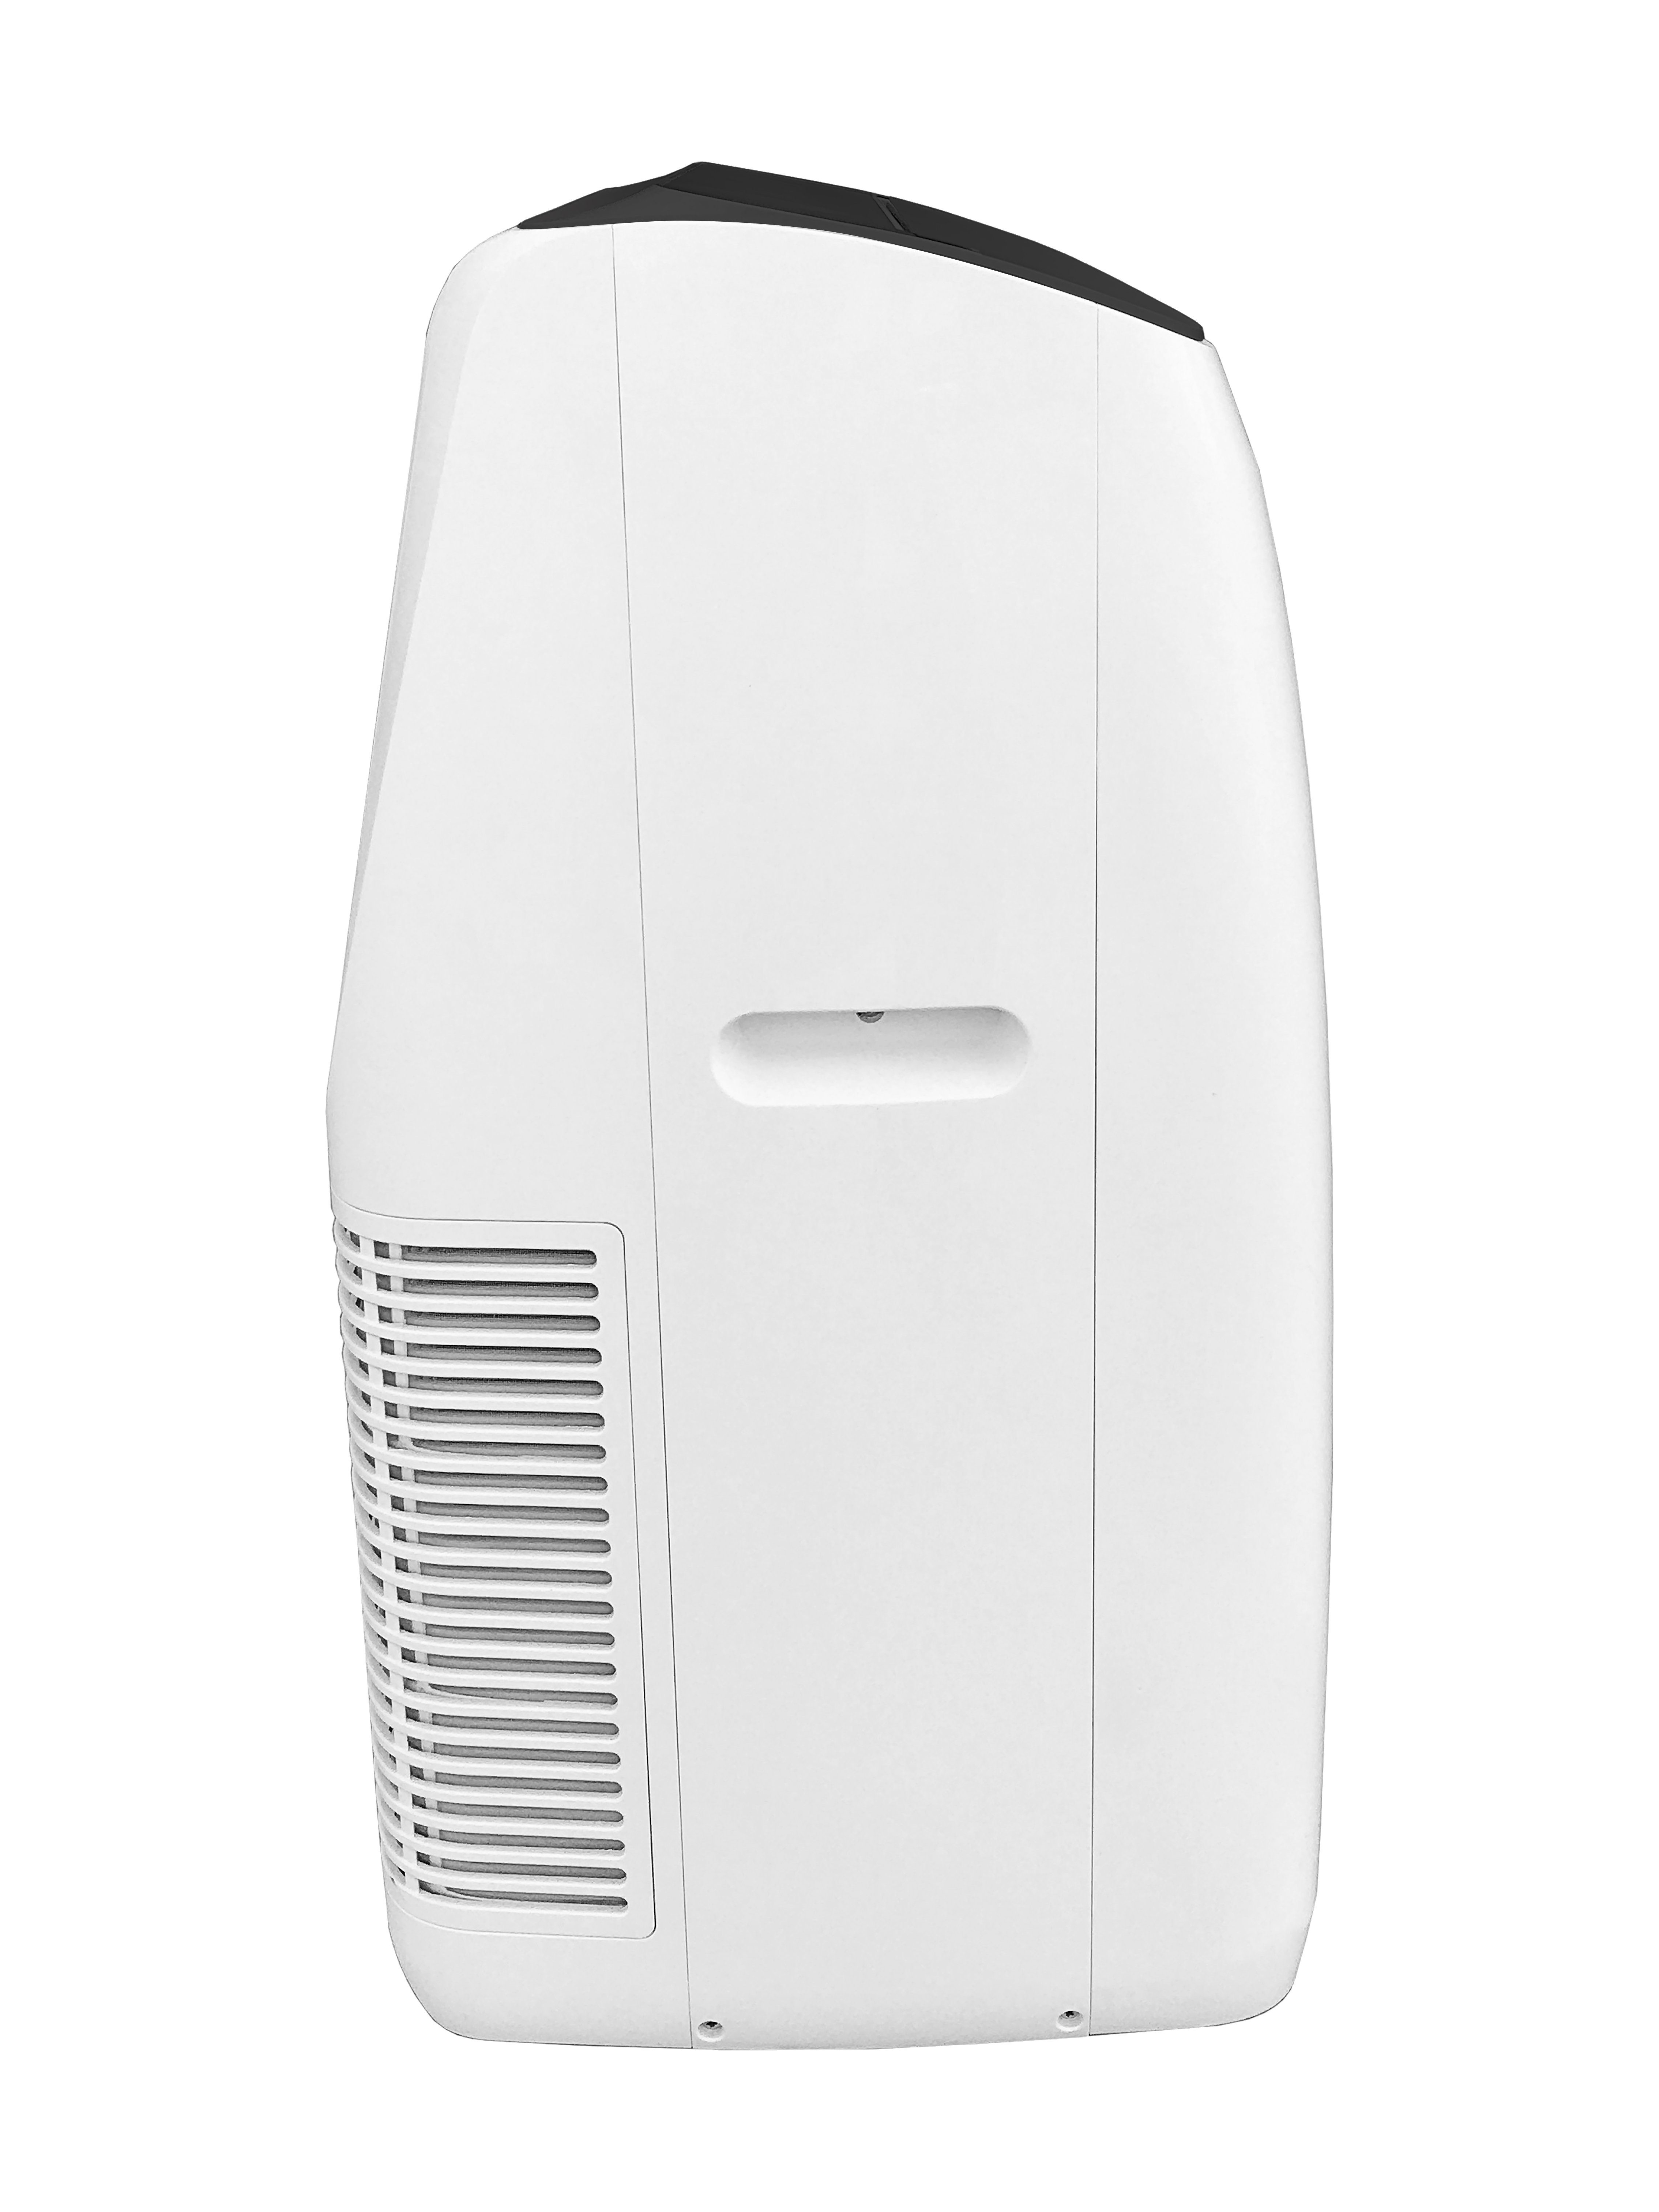 Kühlen cool - BC16KL2201FW, 3-in-1-Klimagerät Klimaanlage, - mobile Mobiles be Klimagerät Lüftung, Entfeuchten Energiesparmodus